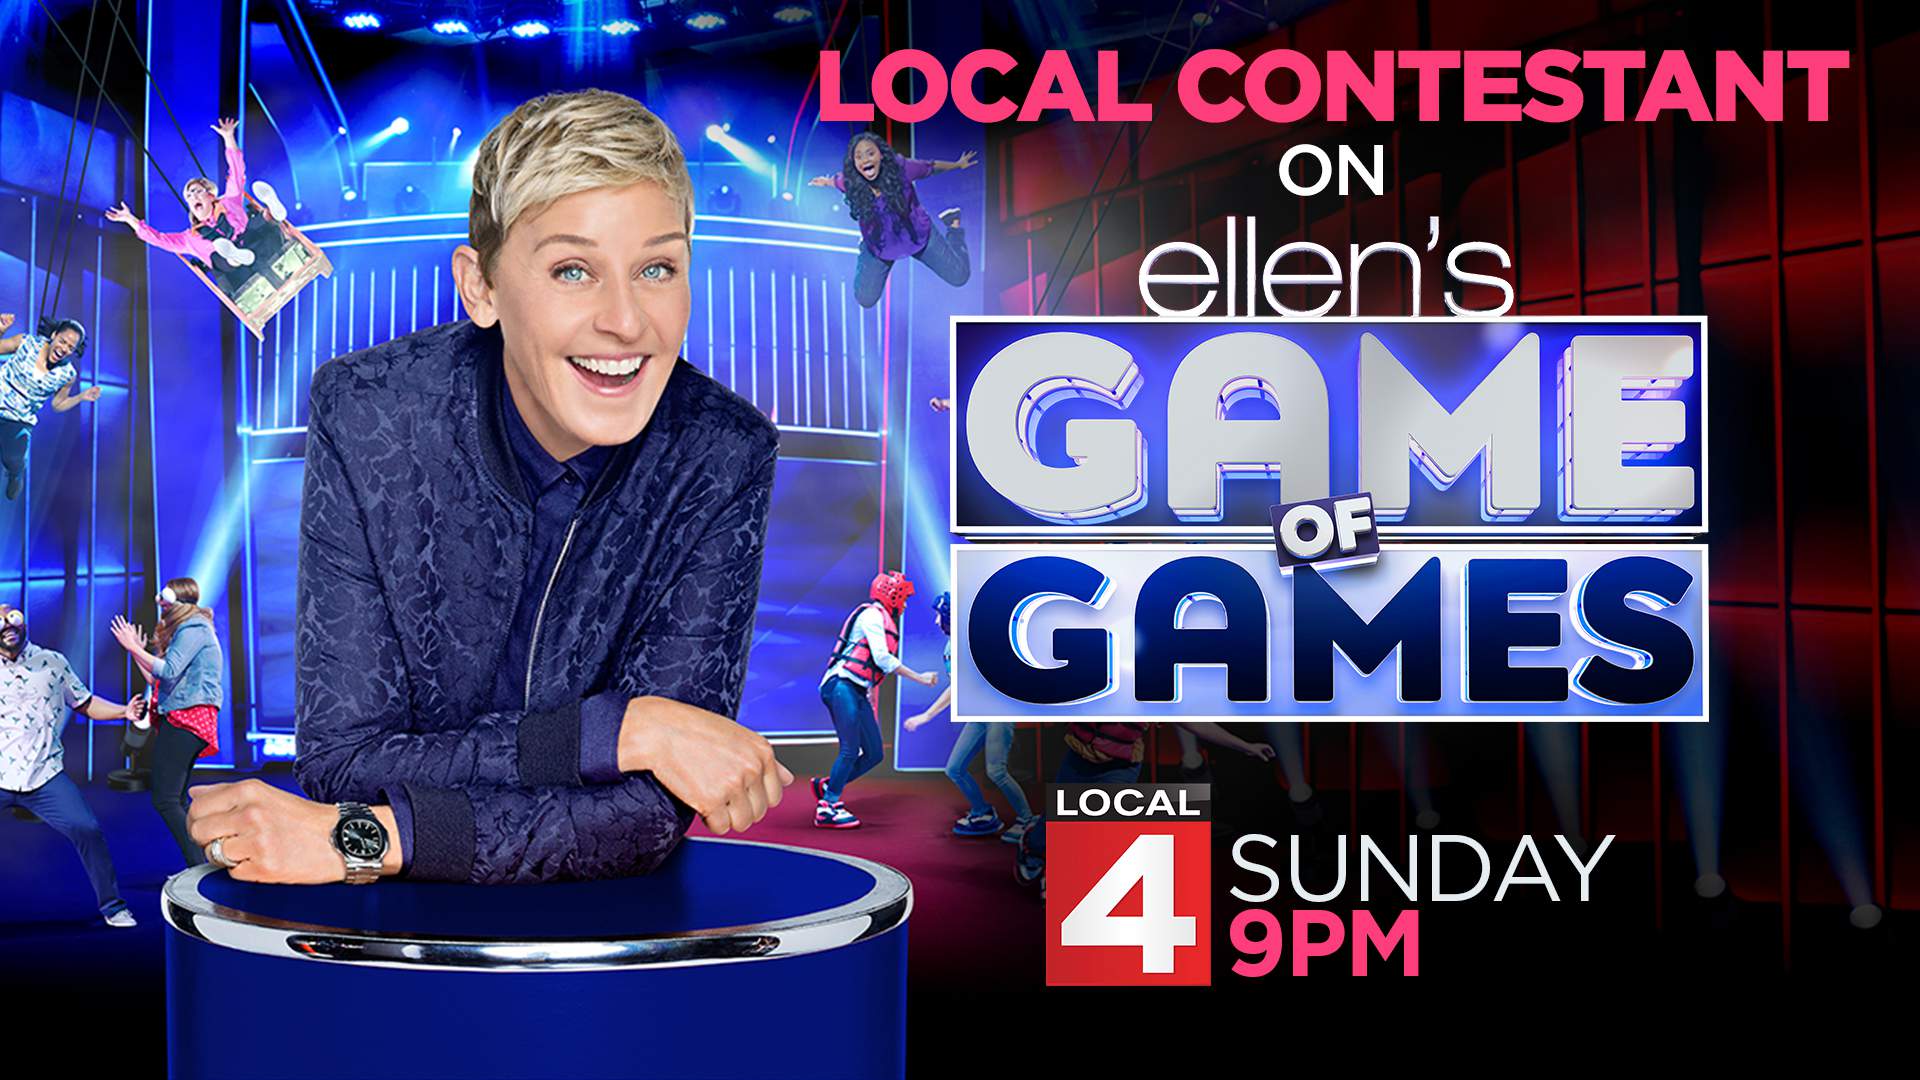 Detroiter competes on ‘Ellen’s Game of Games’